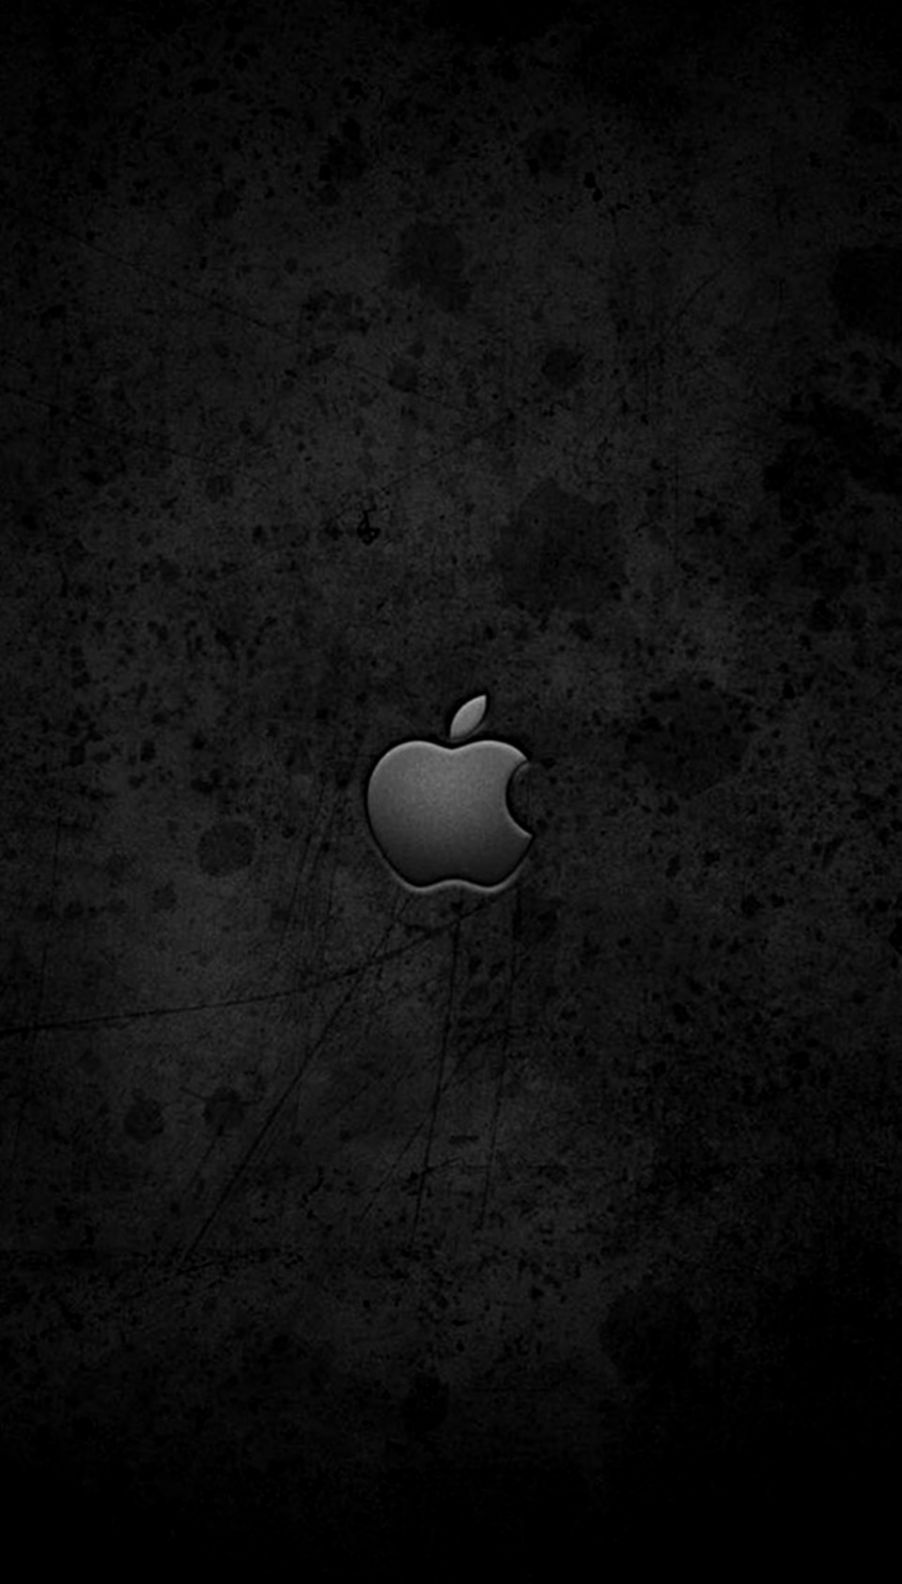 Black Apple Logo Wallpaper For Iphone 6 photos of Iphone Wallpaper